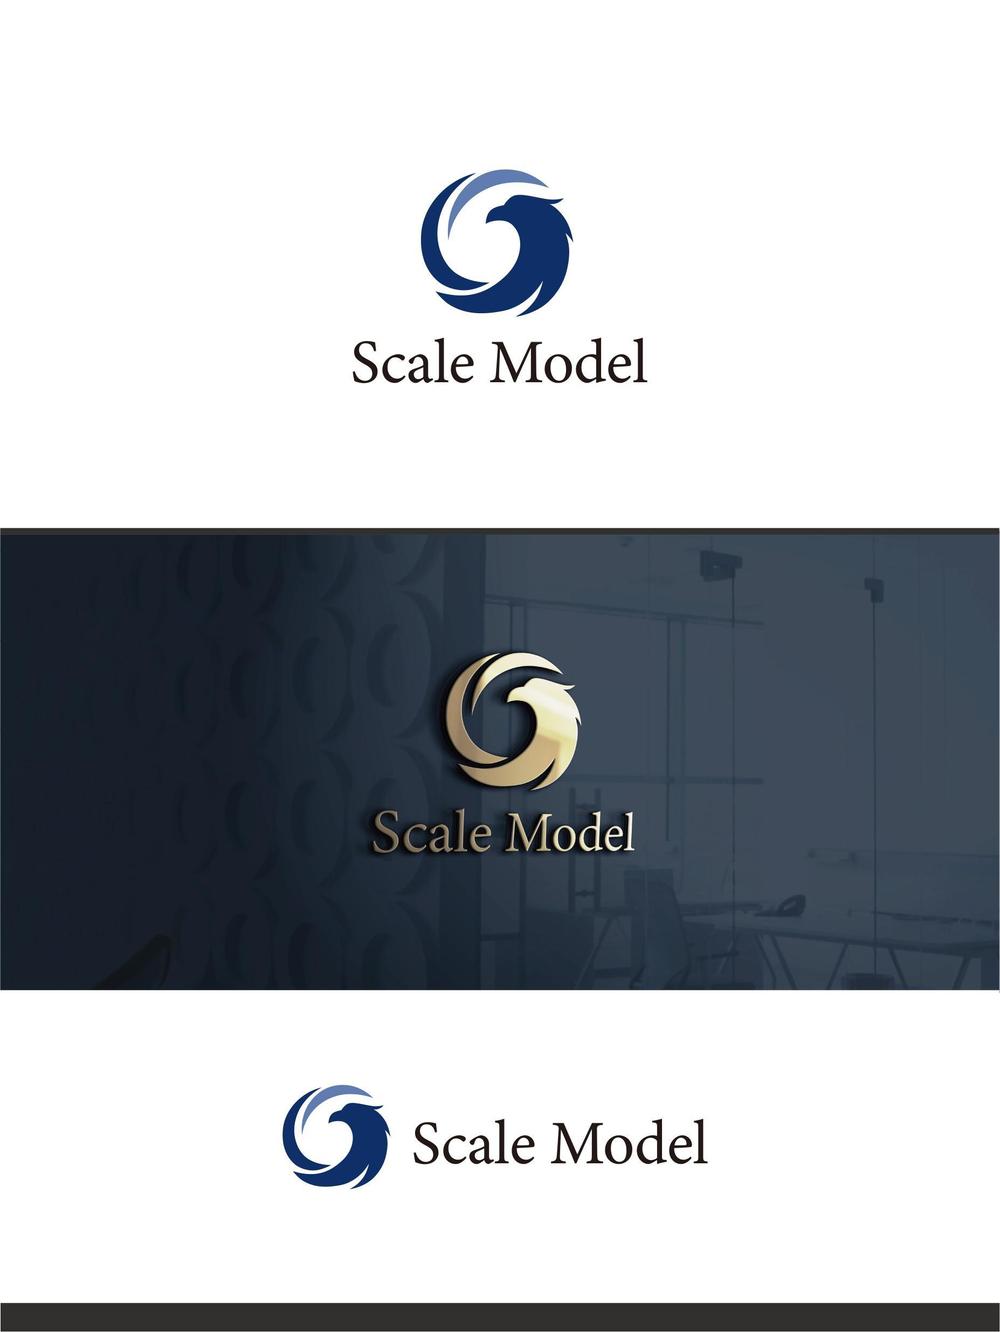 Scale Model_01.jpg